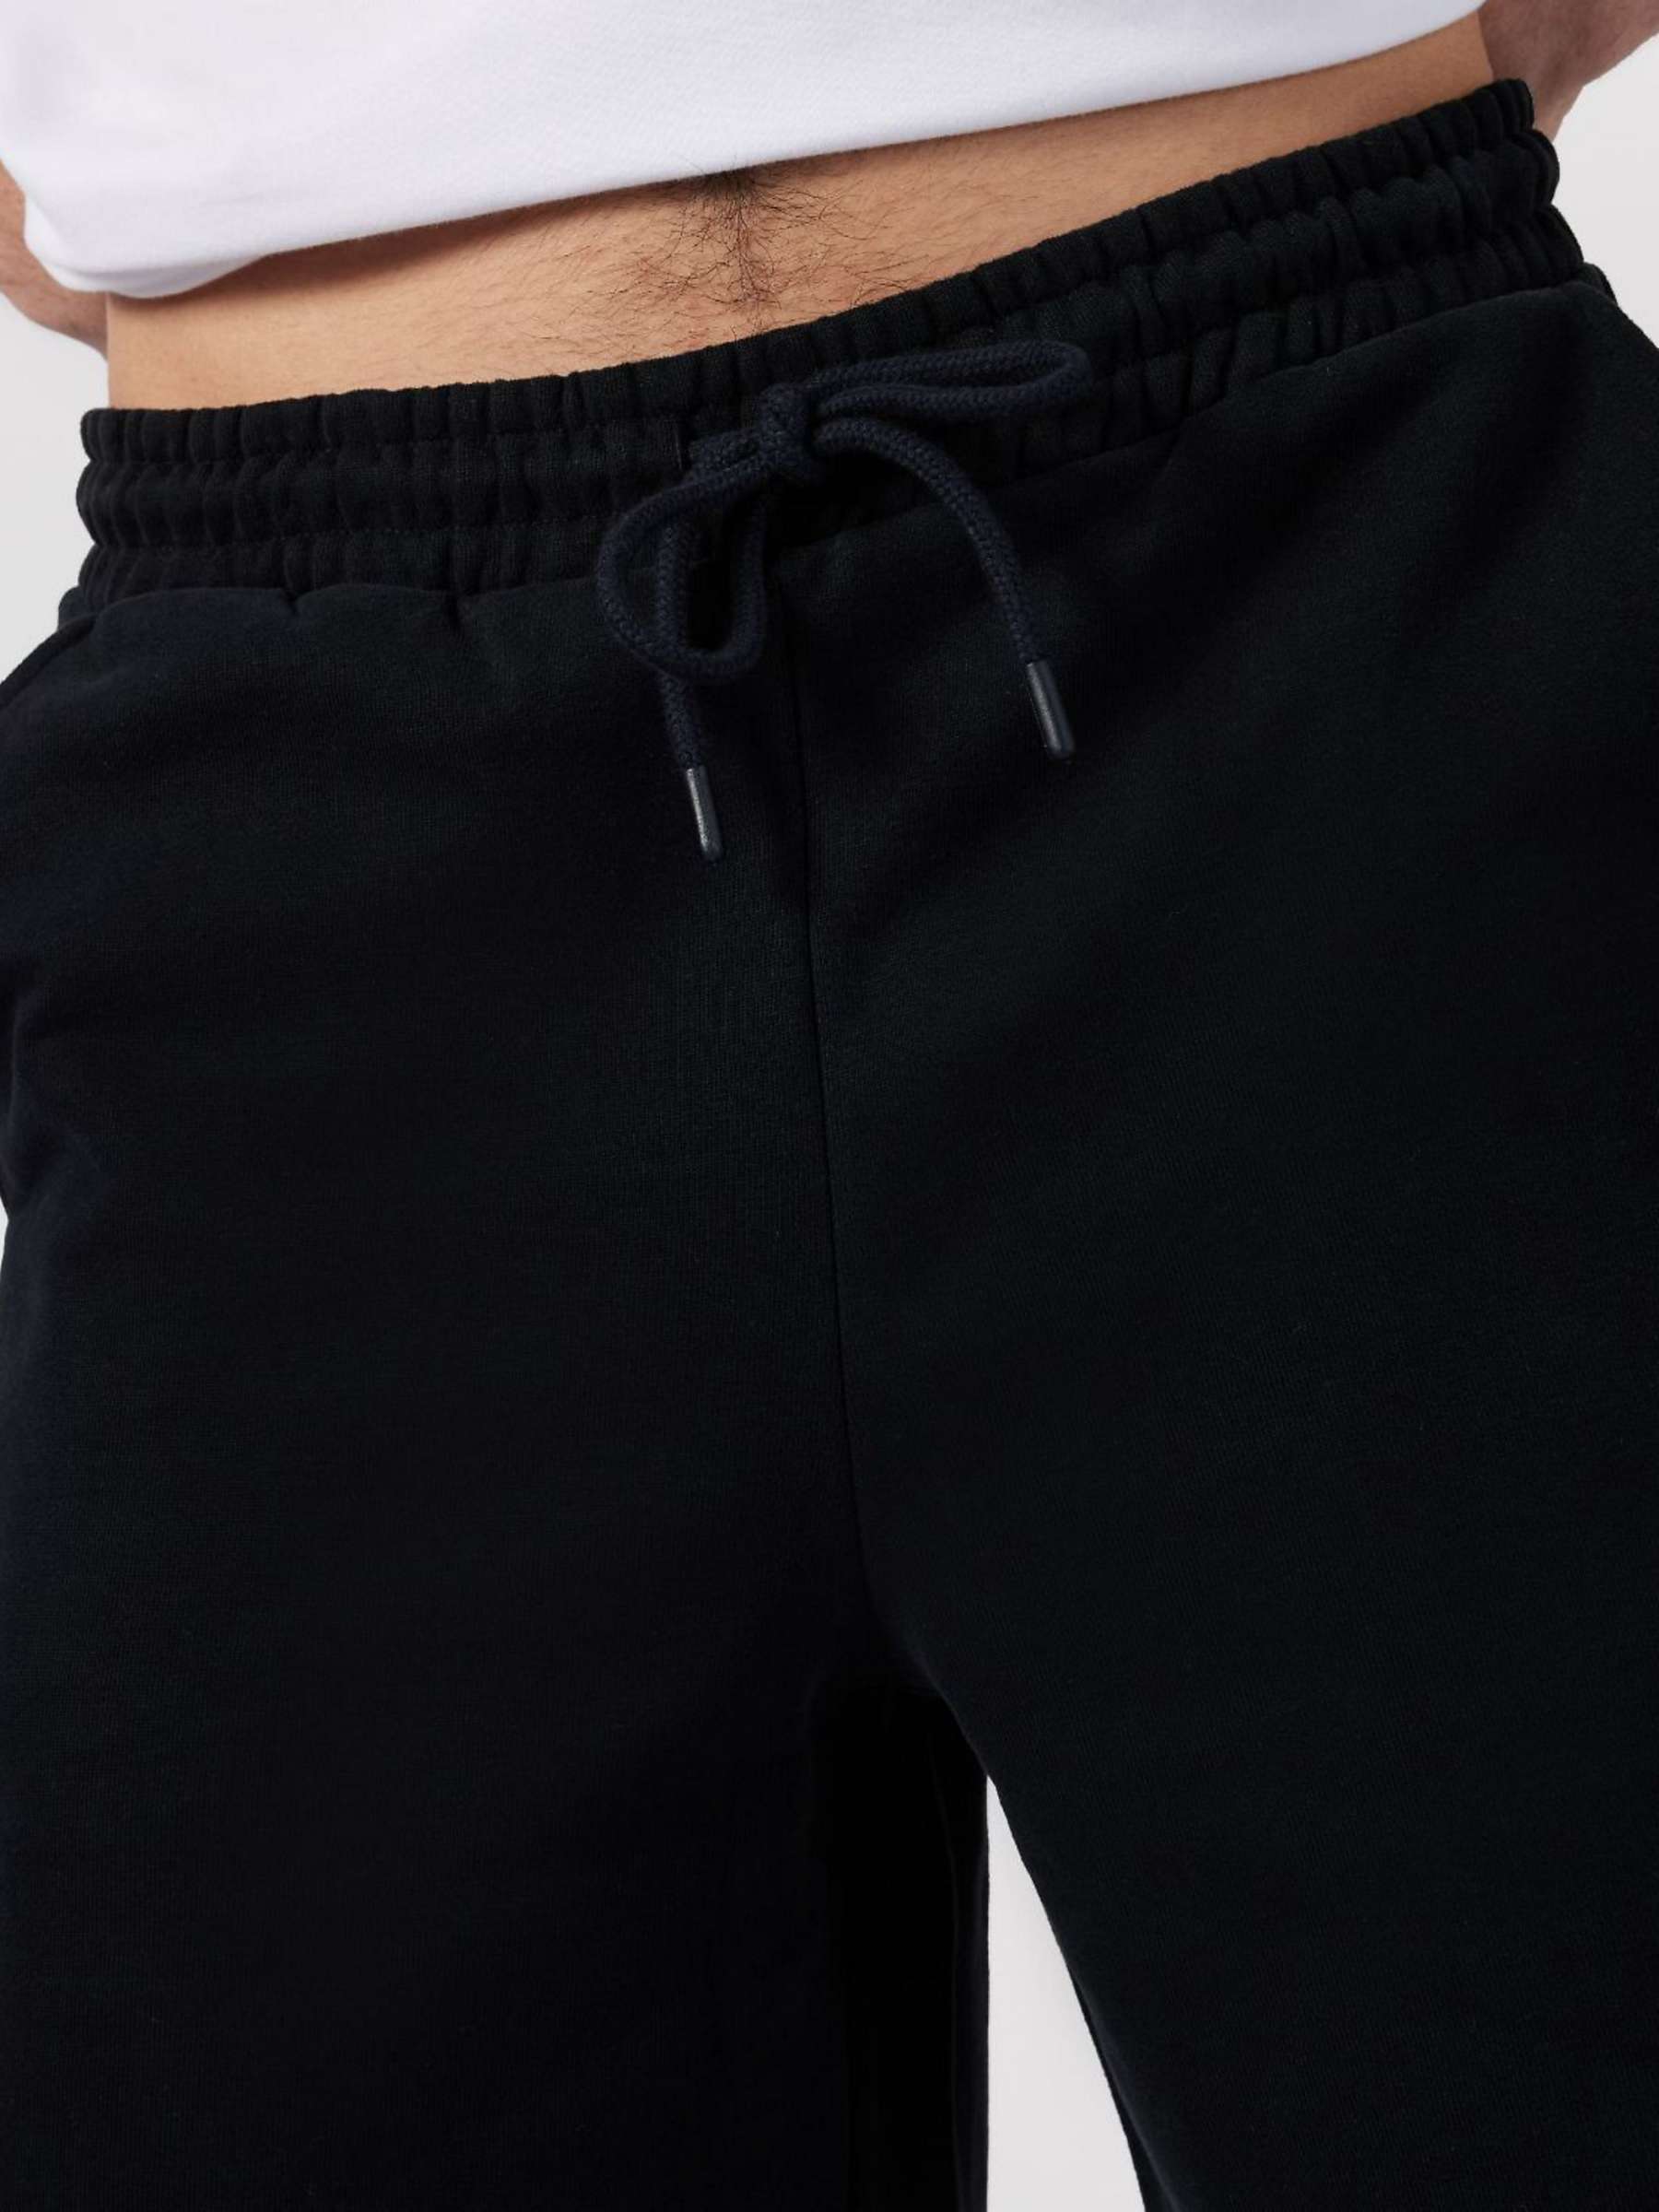 Buy Chelsea Peers Organic Cotton Sweat Shorts, Black Online at johnlewis.com